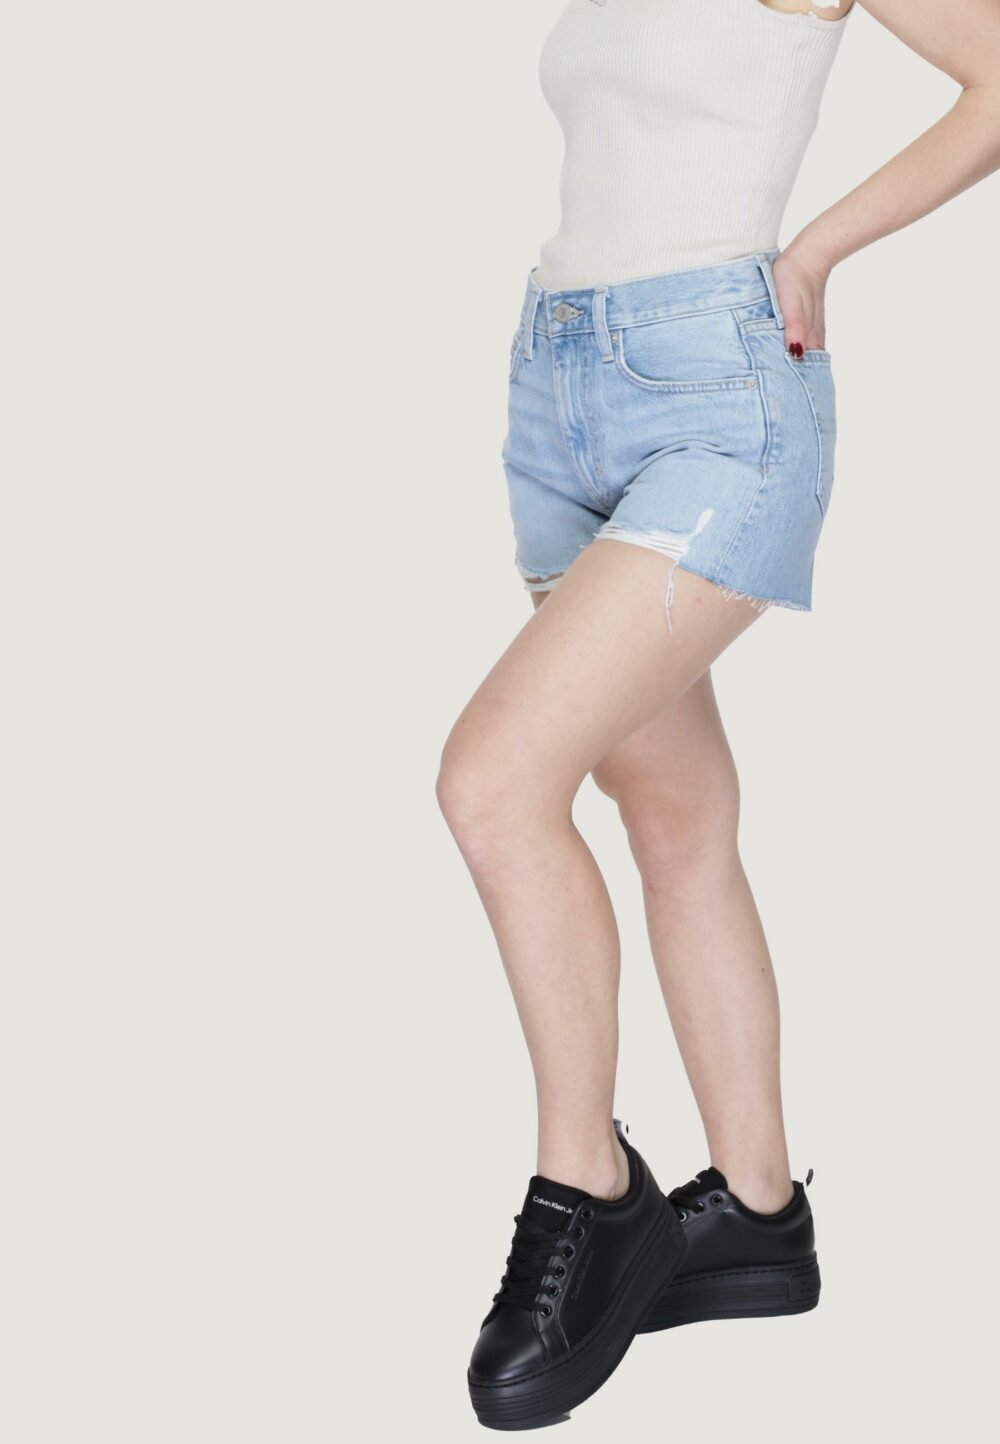 Shorts Tommy Hilfiger Jeans HOT BH0015 Denim chiaro - Foto 3